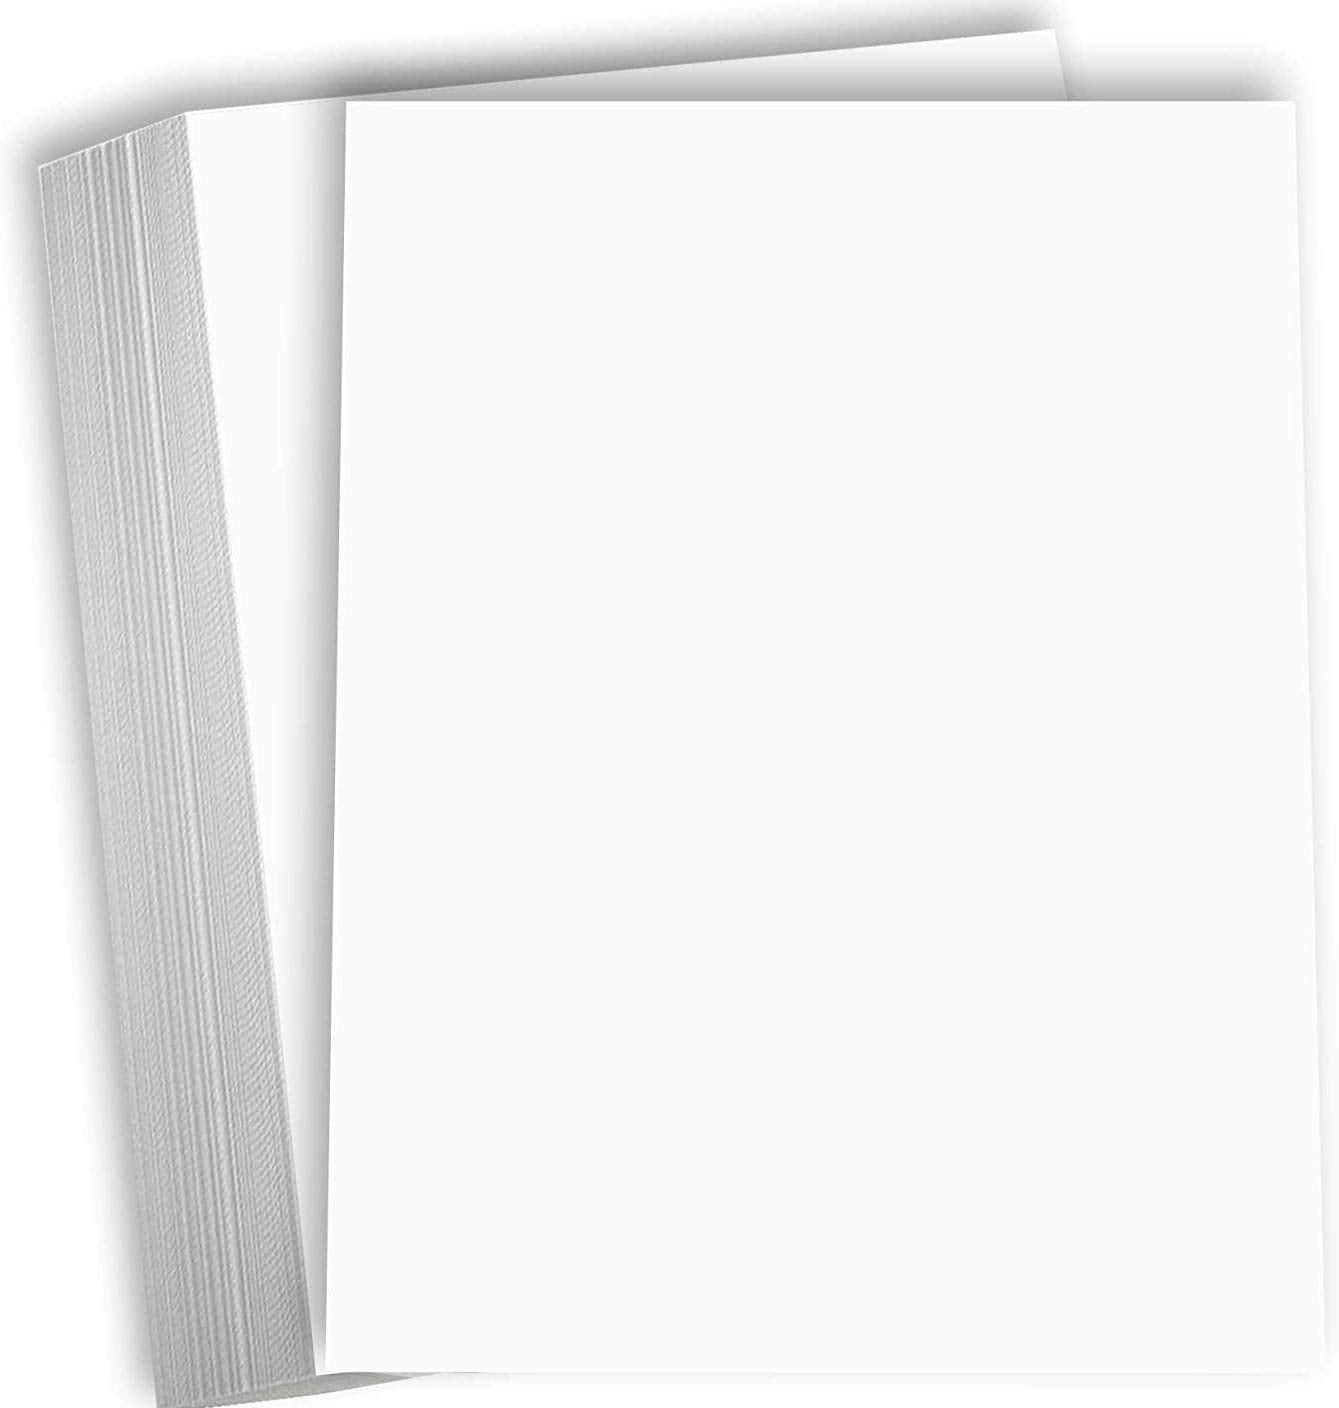 A4 Paper Sheet - Home Essentials Store Retail